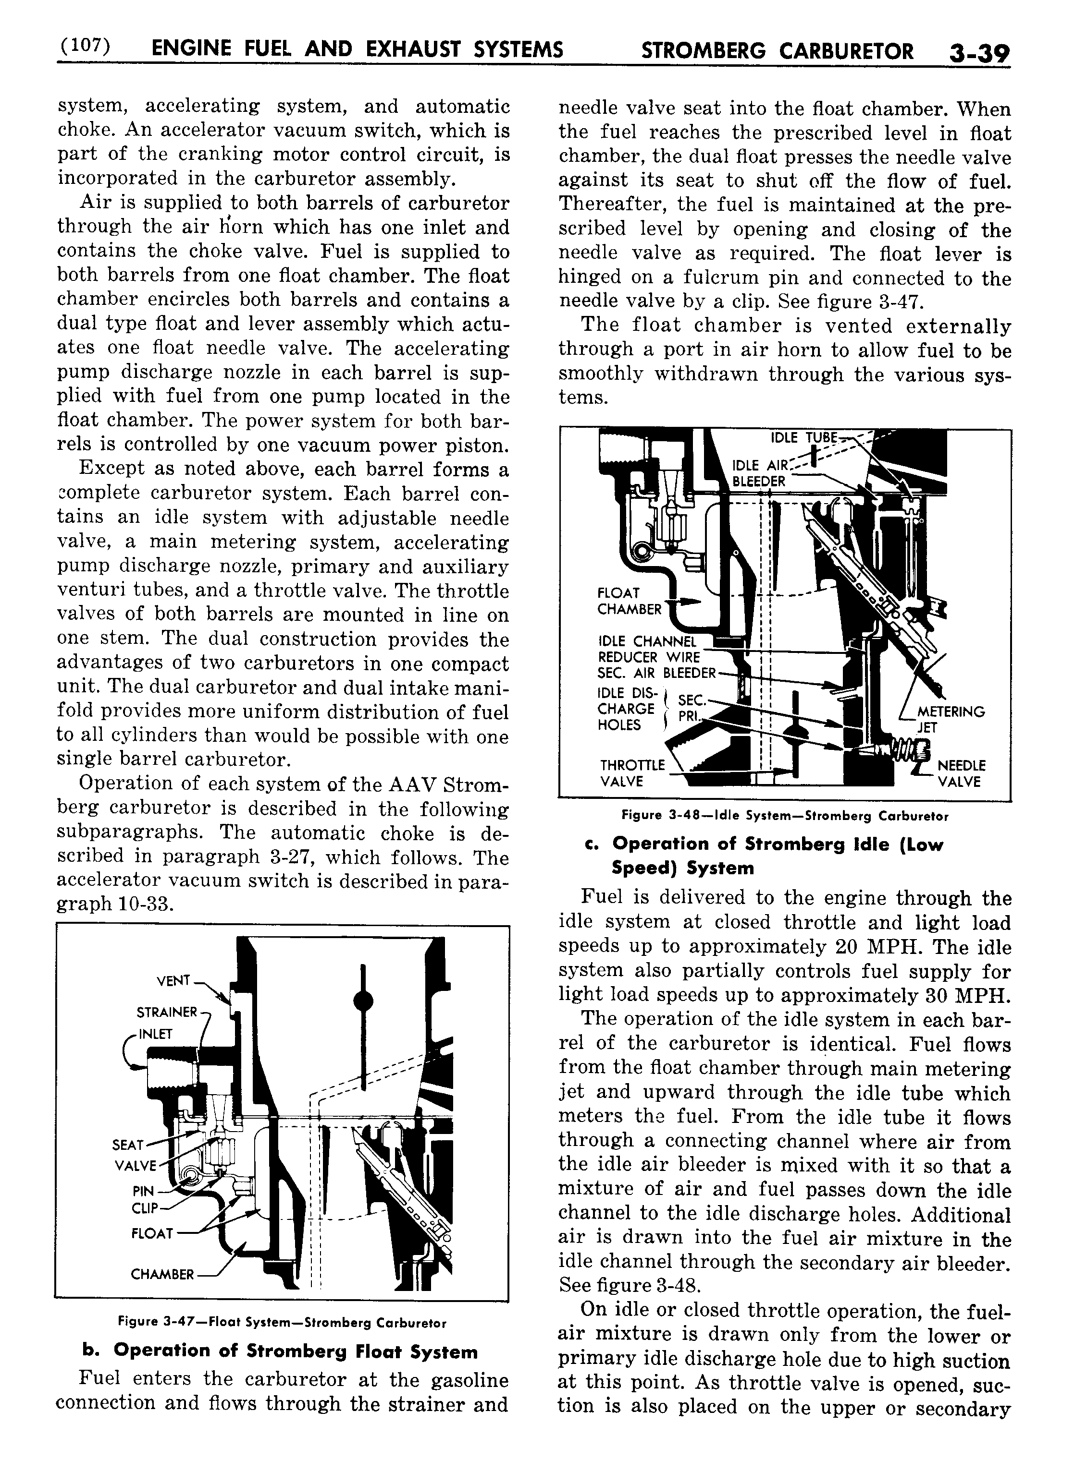 n_04 1951 Buick Shop Manual - Engine Fuel & Exhaust-039-039.jpg